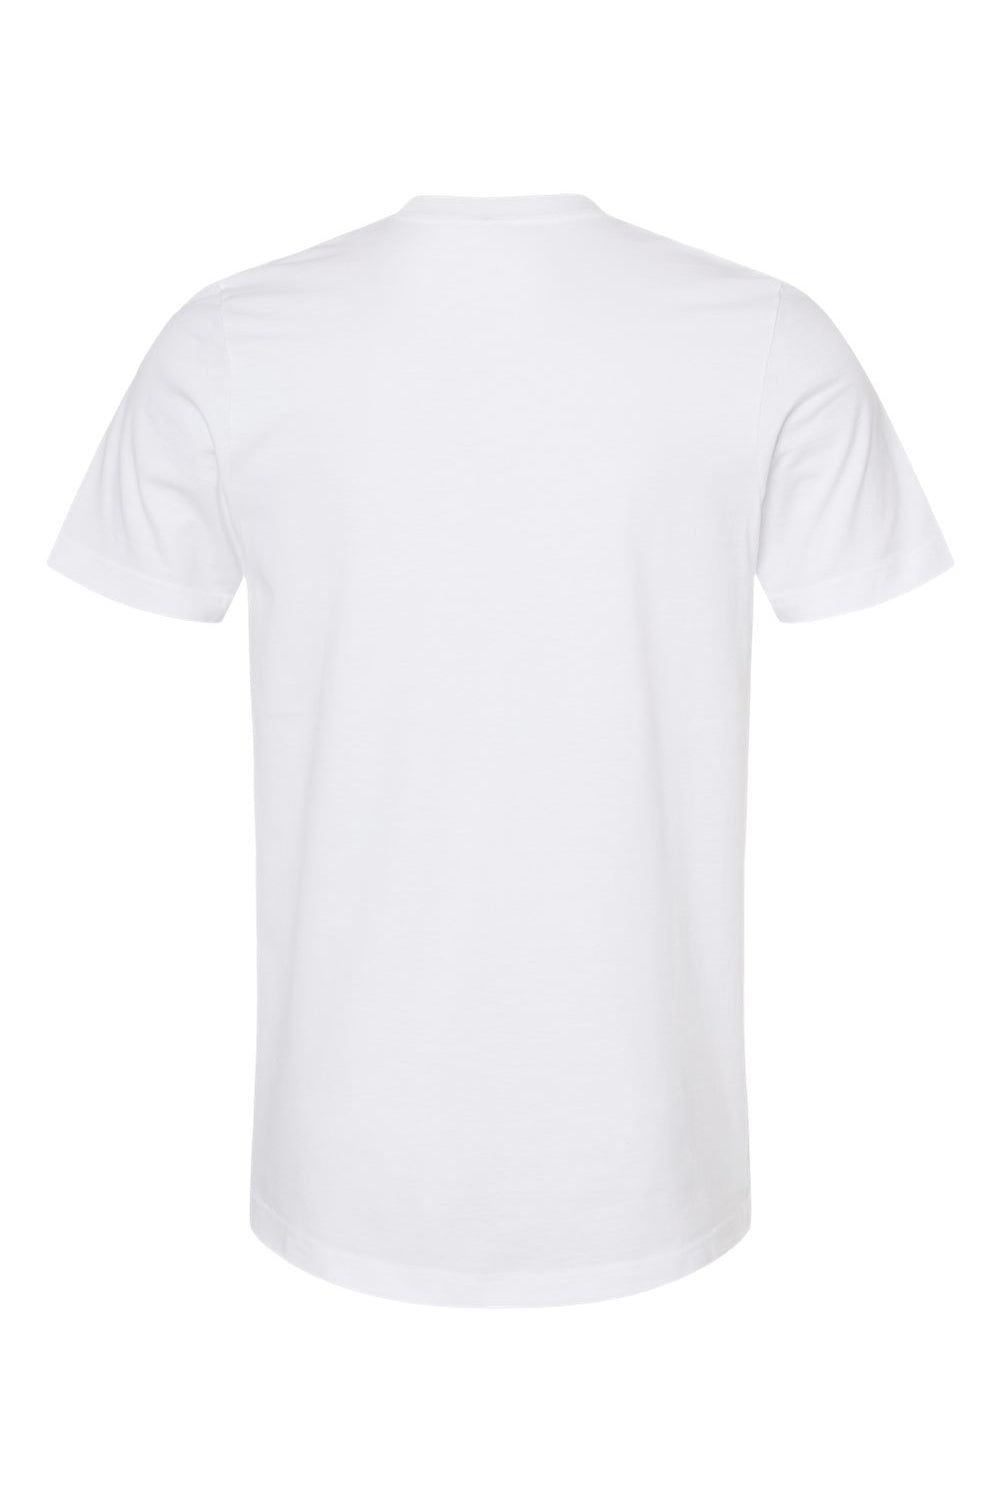 Tultex 602 Mens Short Sleeve Crewneck T-Shirt White Flat Back